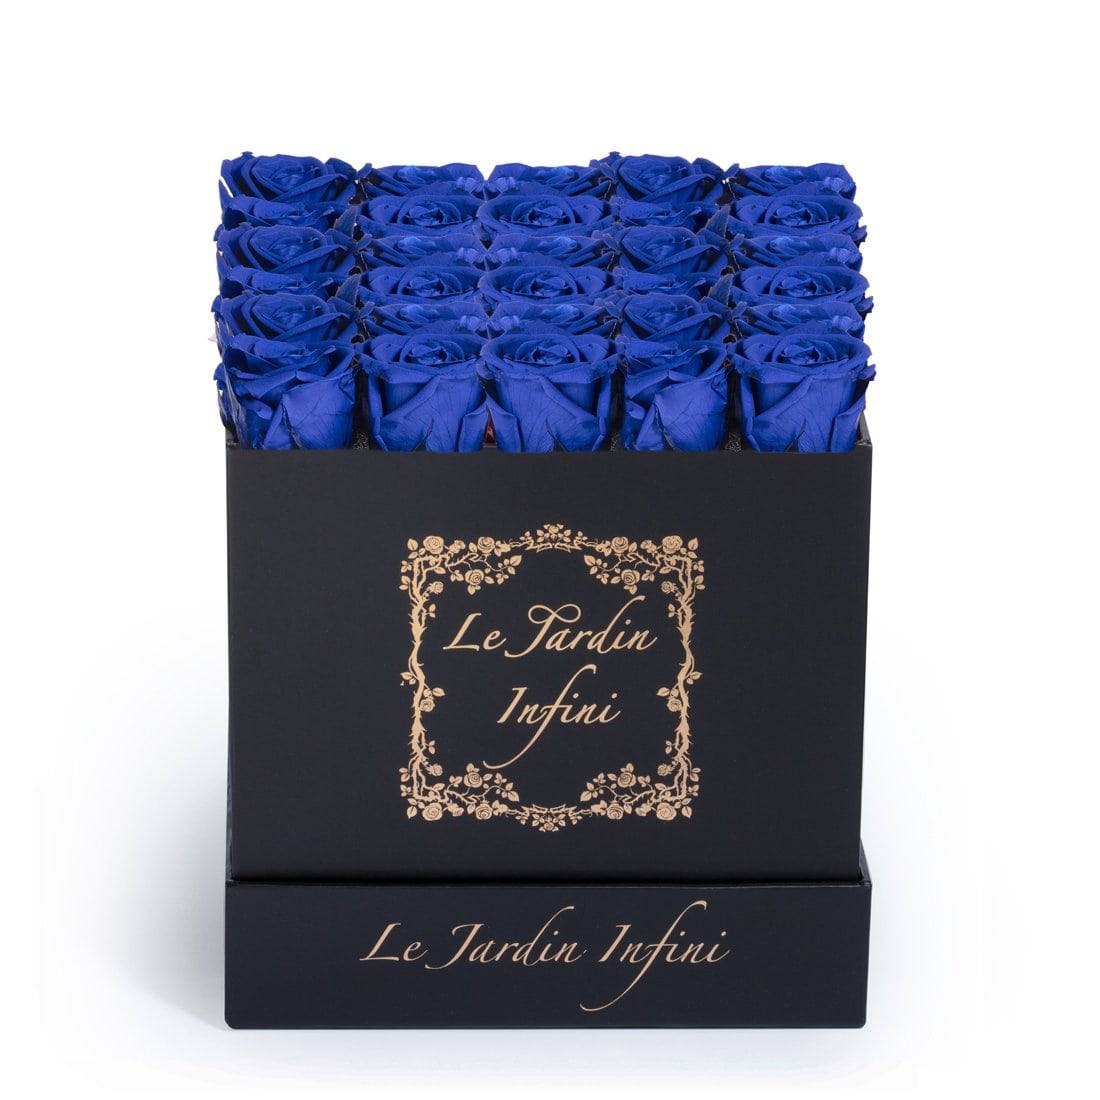 Royal Blue Preserved Roses - Medium Square Black Box